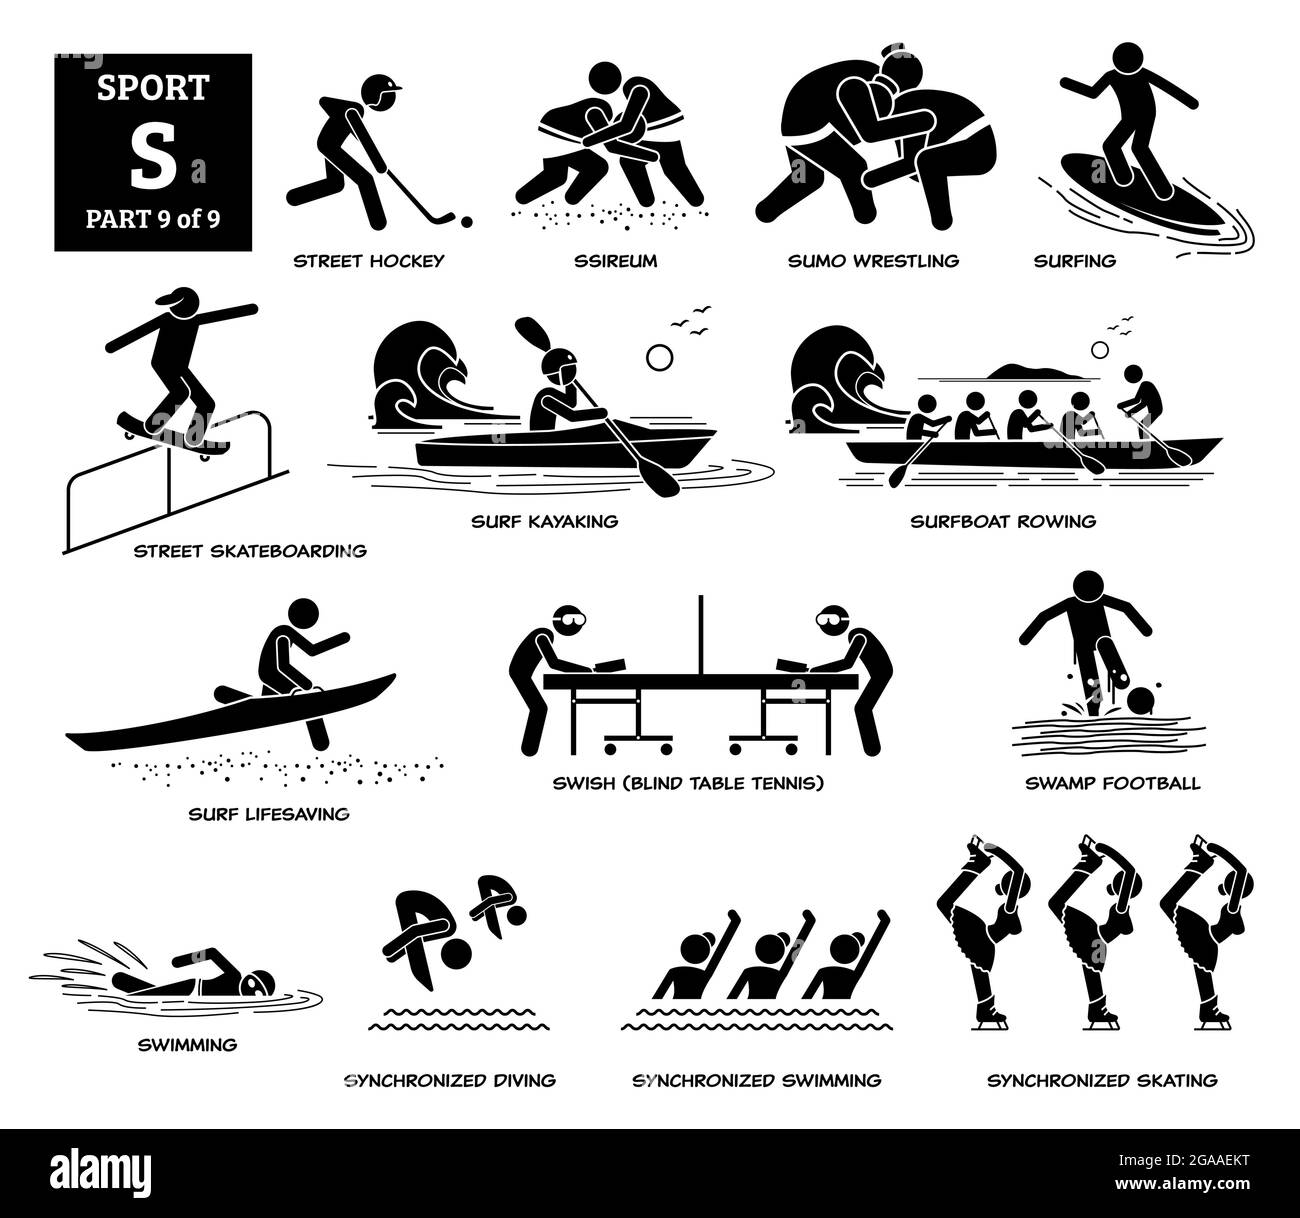 Sport games alphabet S vector icons pictogram. Street hockey, sumo, surfing, street skateboarding, surf kayaking, surfboat rowing, swish, swamp footba Stock Vector